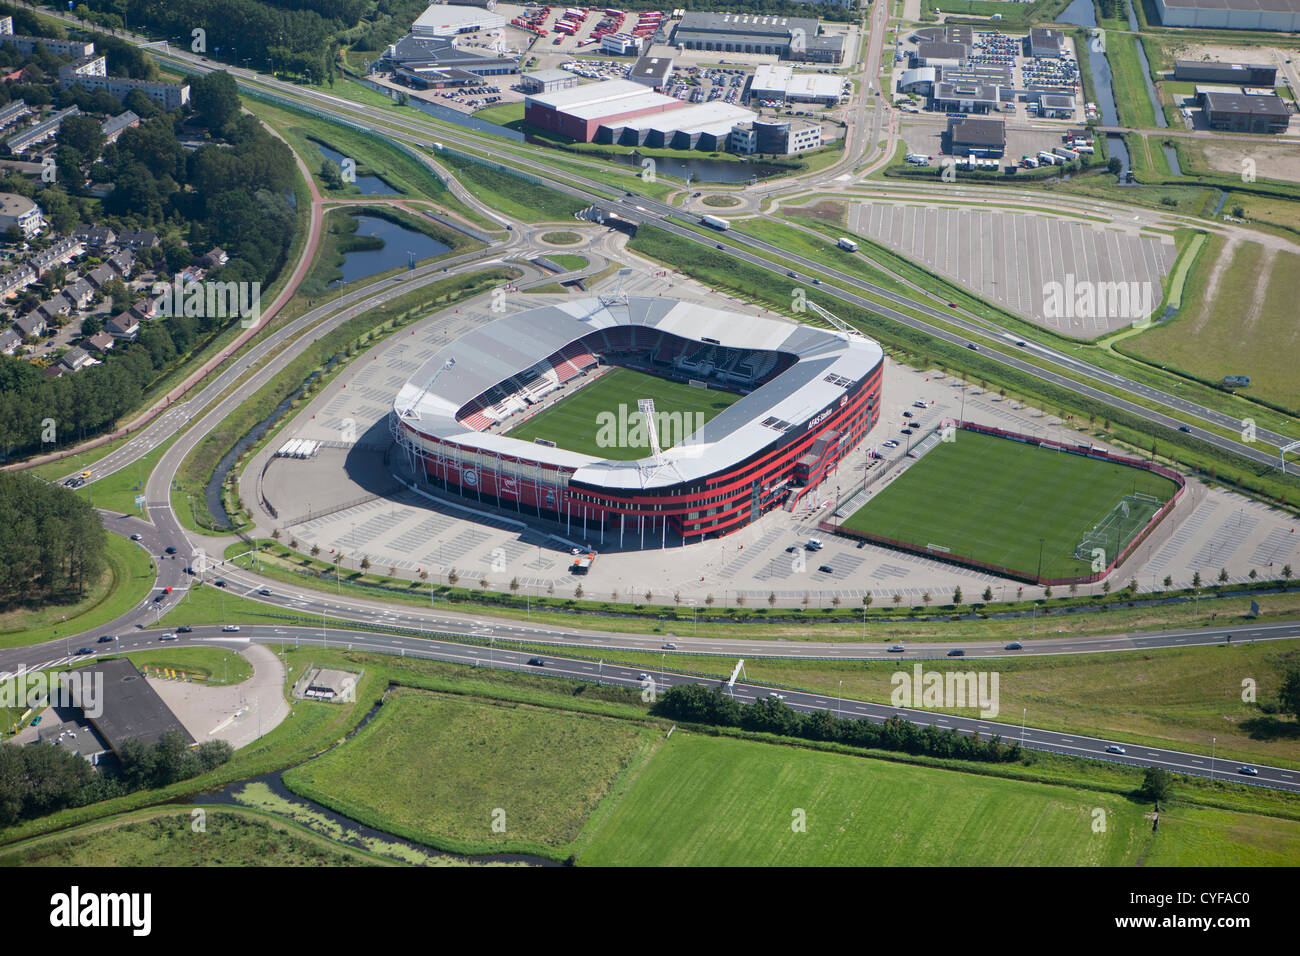 Die Niederlande, Alkmaar. Fussballstadion AZ. Antenne. Stockfoto